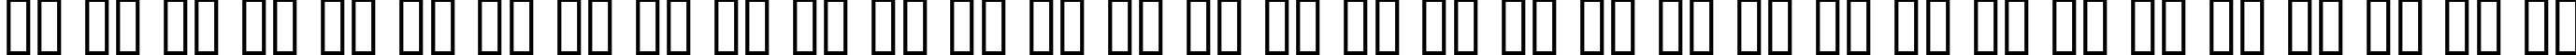 Пример написания русского алфавита шрифтом Times New Roman MT Extra Bold